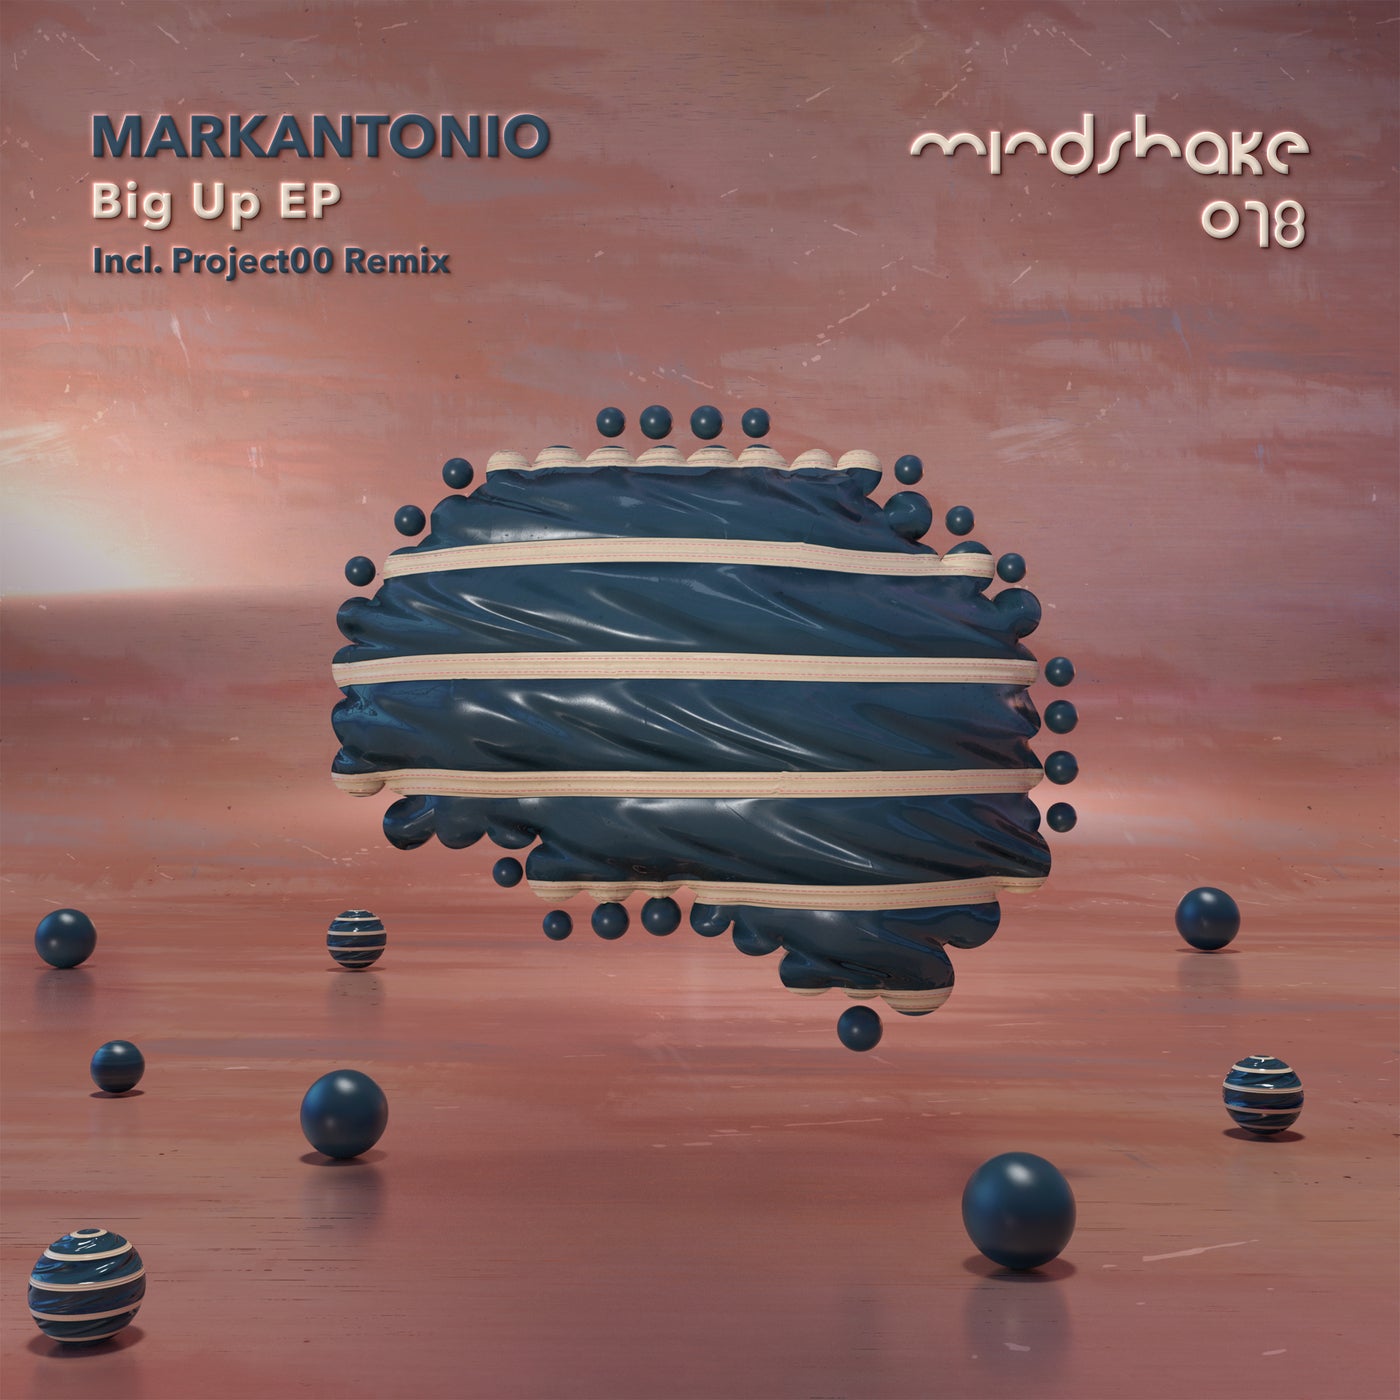 image cover: Markantonio - Big Up / MINDSHAKE078